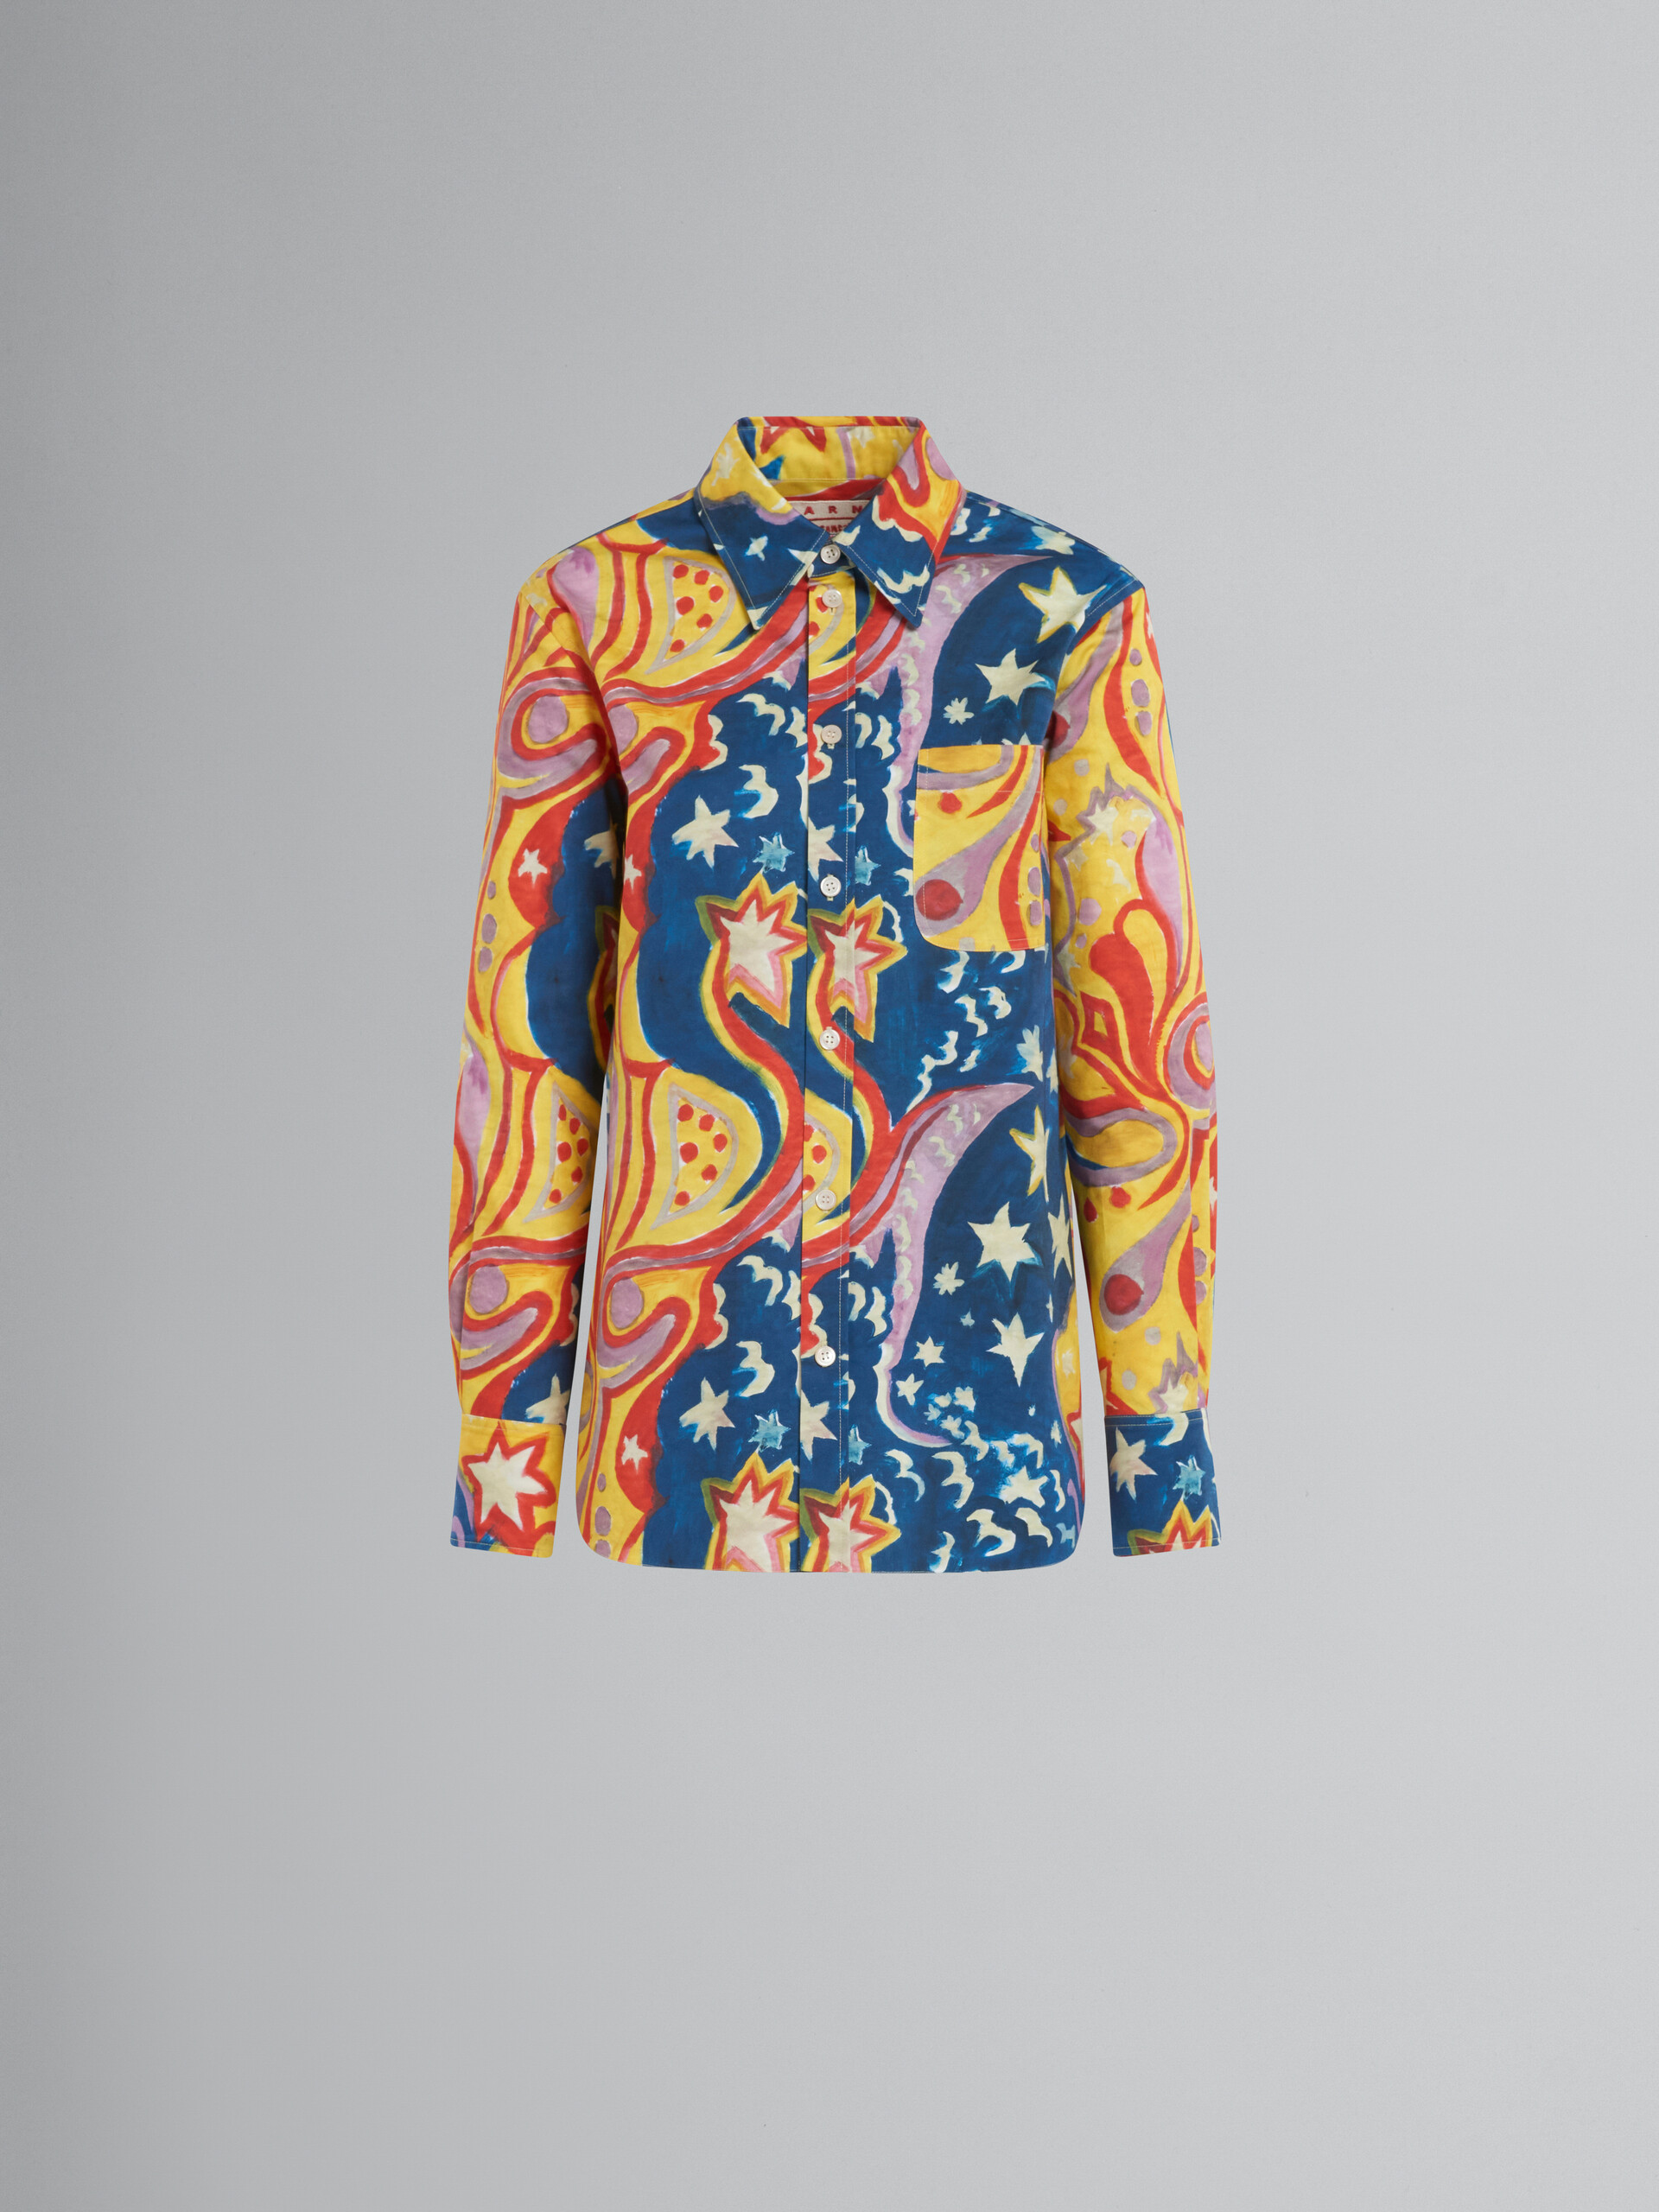 Marni x No Vacancy Inn - Multicolored cotton satin shirt with Galactic Paradise print - Shirts - Image 1